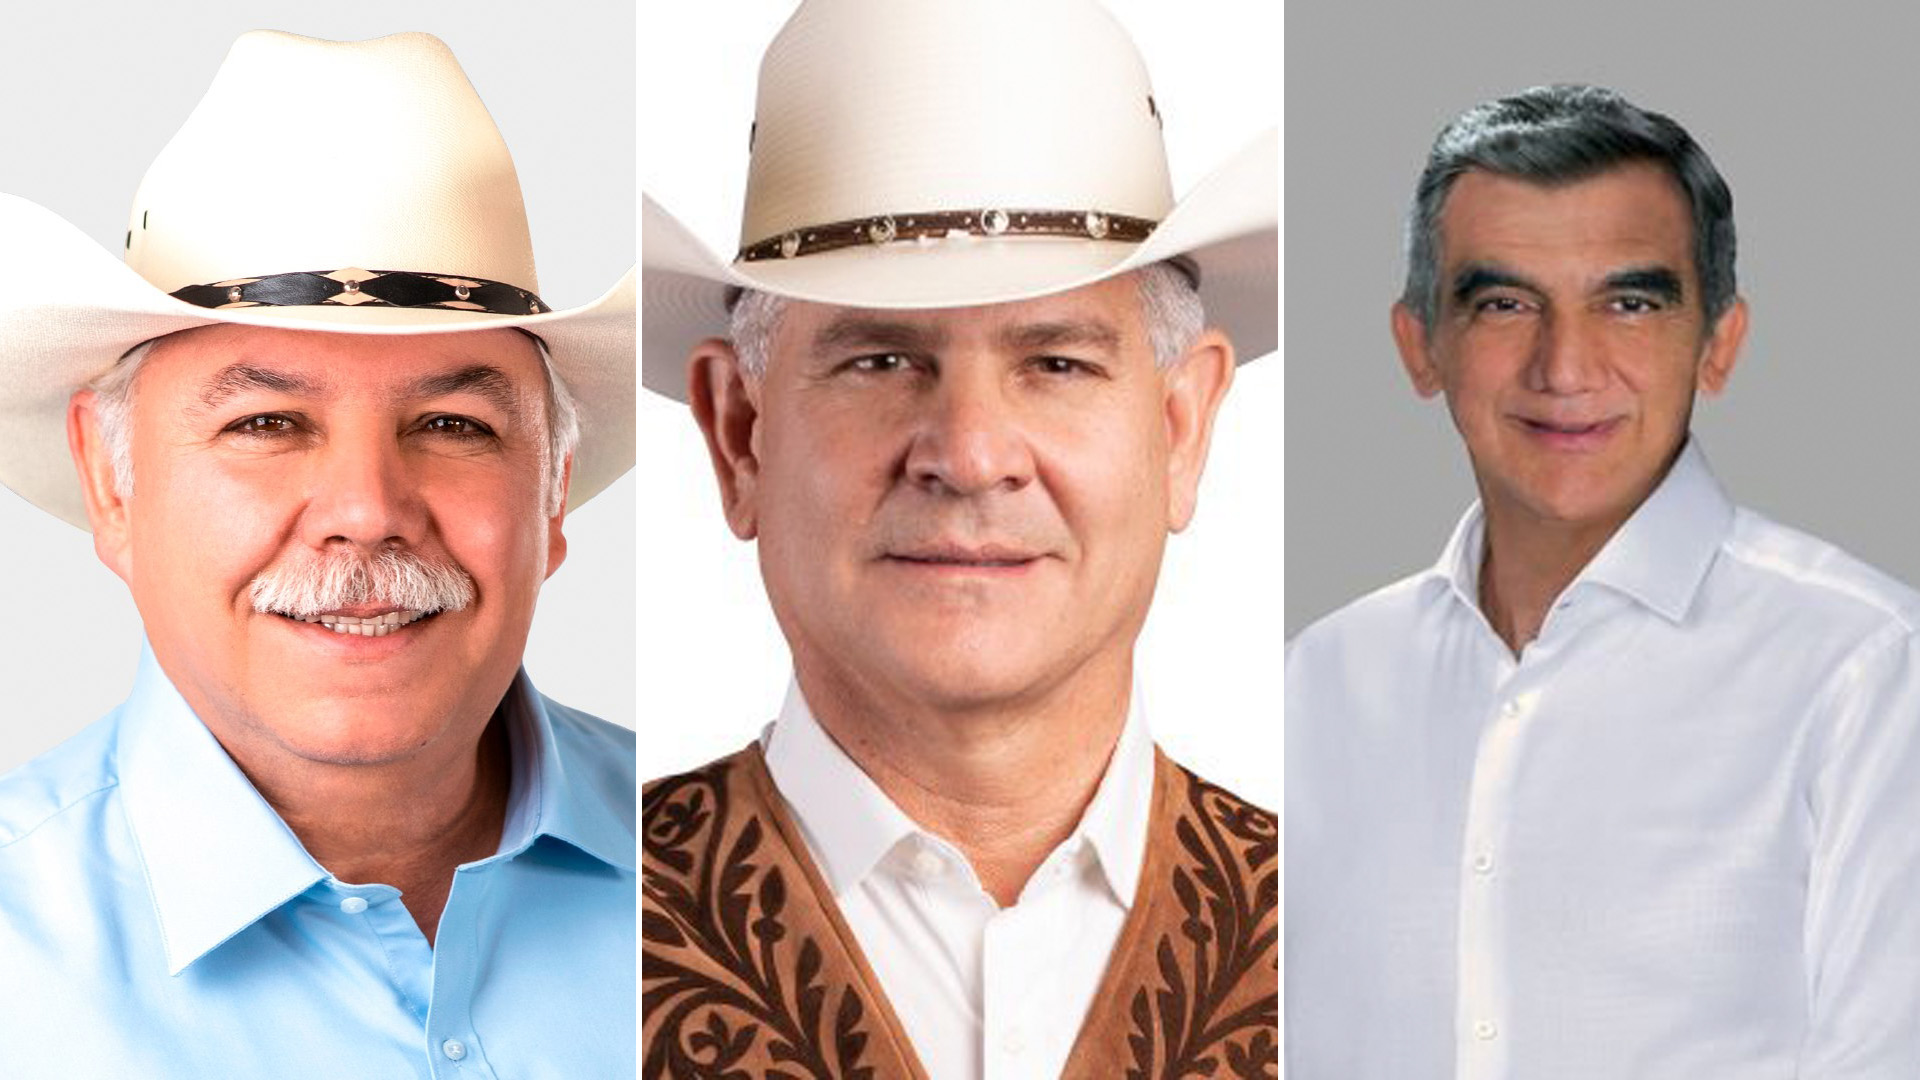 Solo hay tres candidatos a la gubernatura de Tamaulipas (Foto/Facebook/César "Truko" Verástegui/Twitter/@Arturo10Gtz/@Dr_AVillarreal)